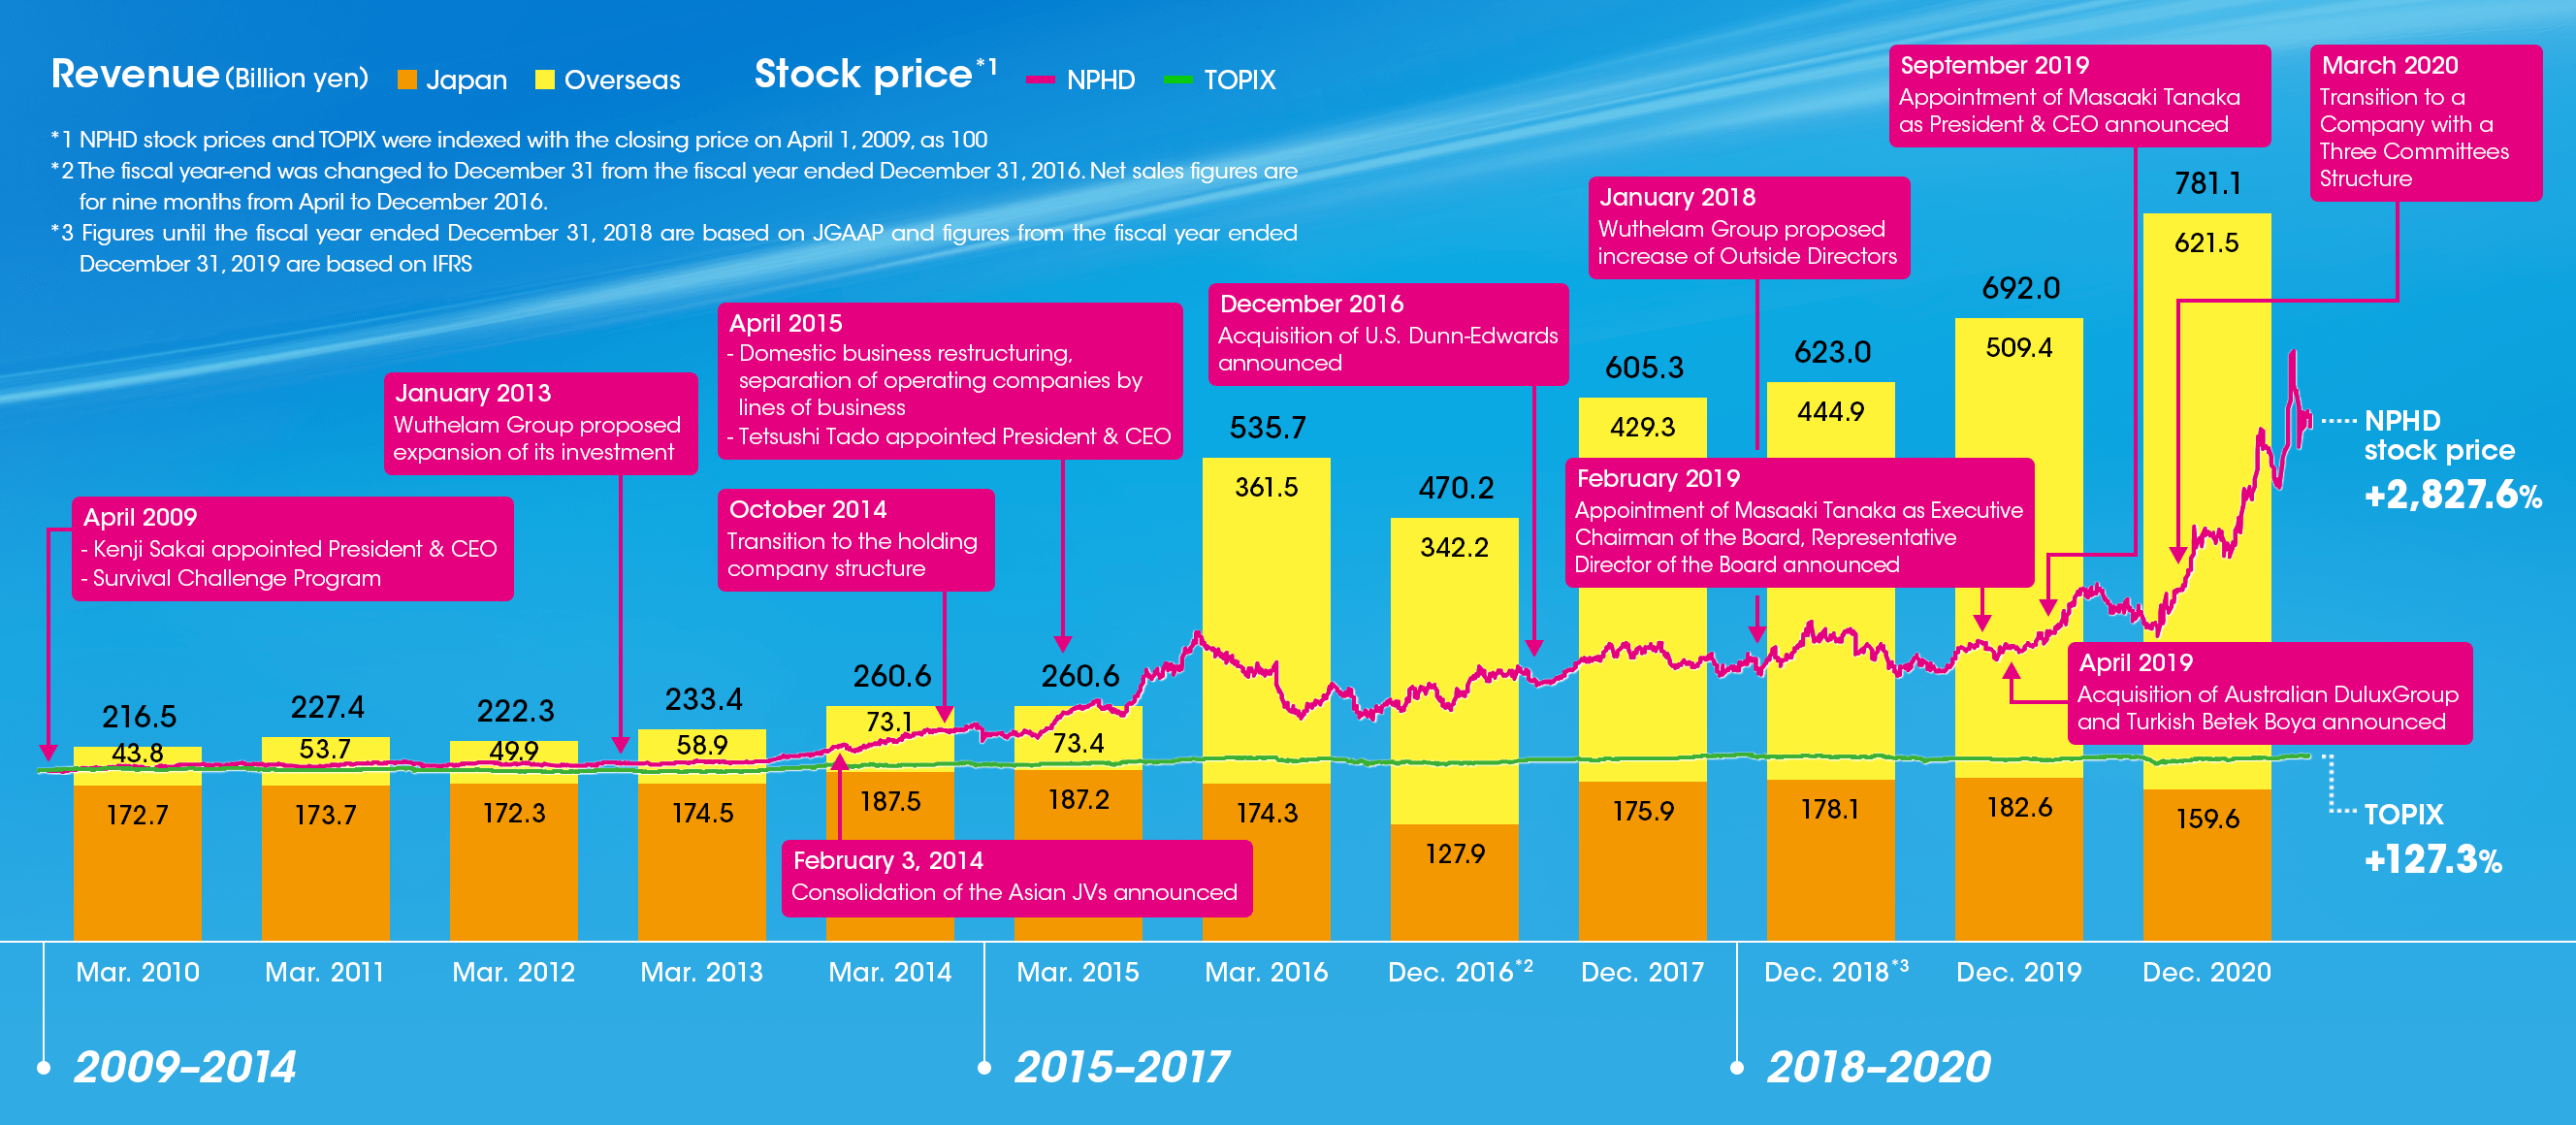 Revenue and Stock price